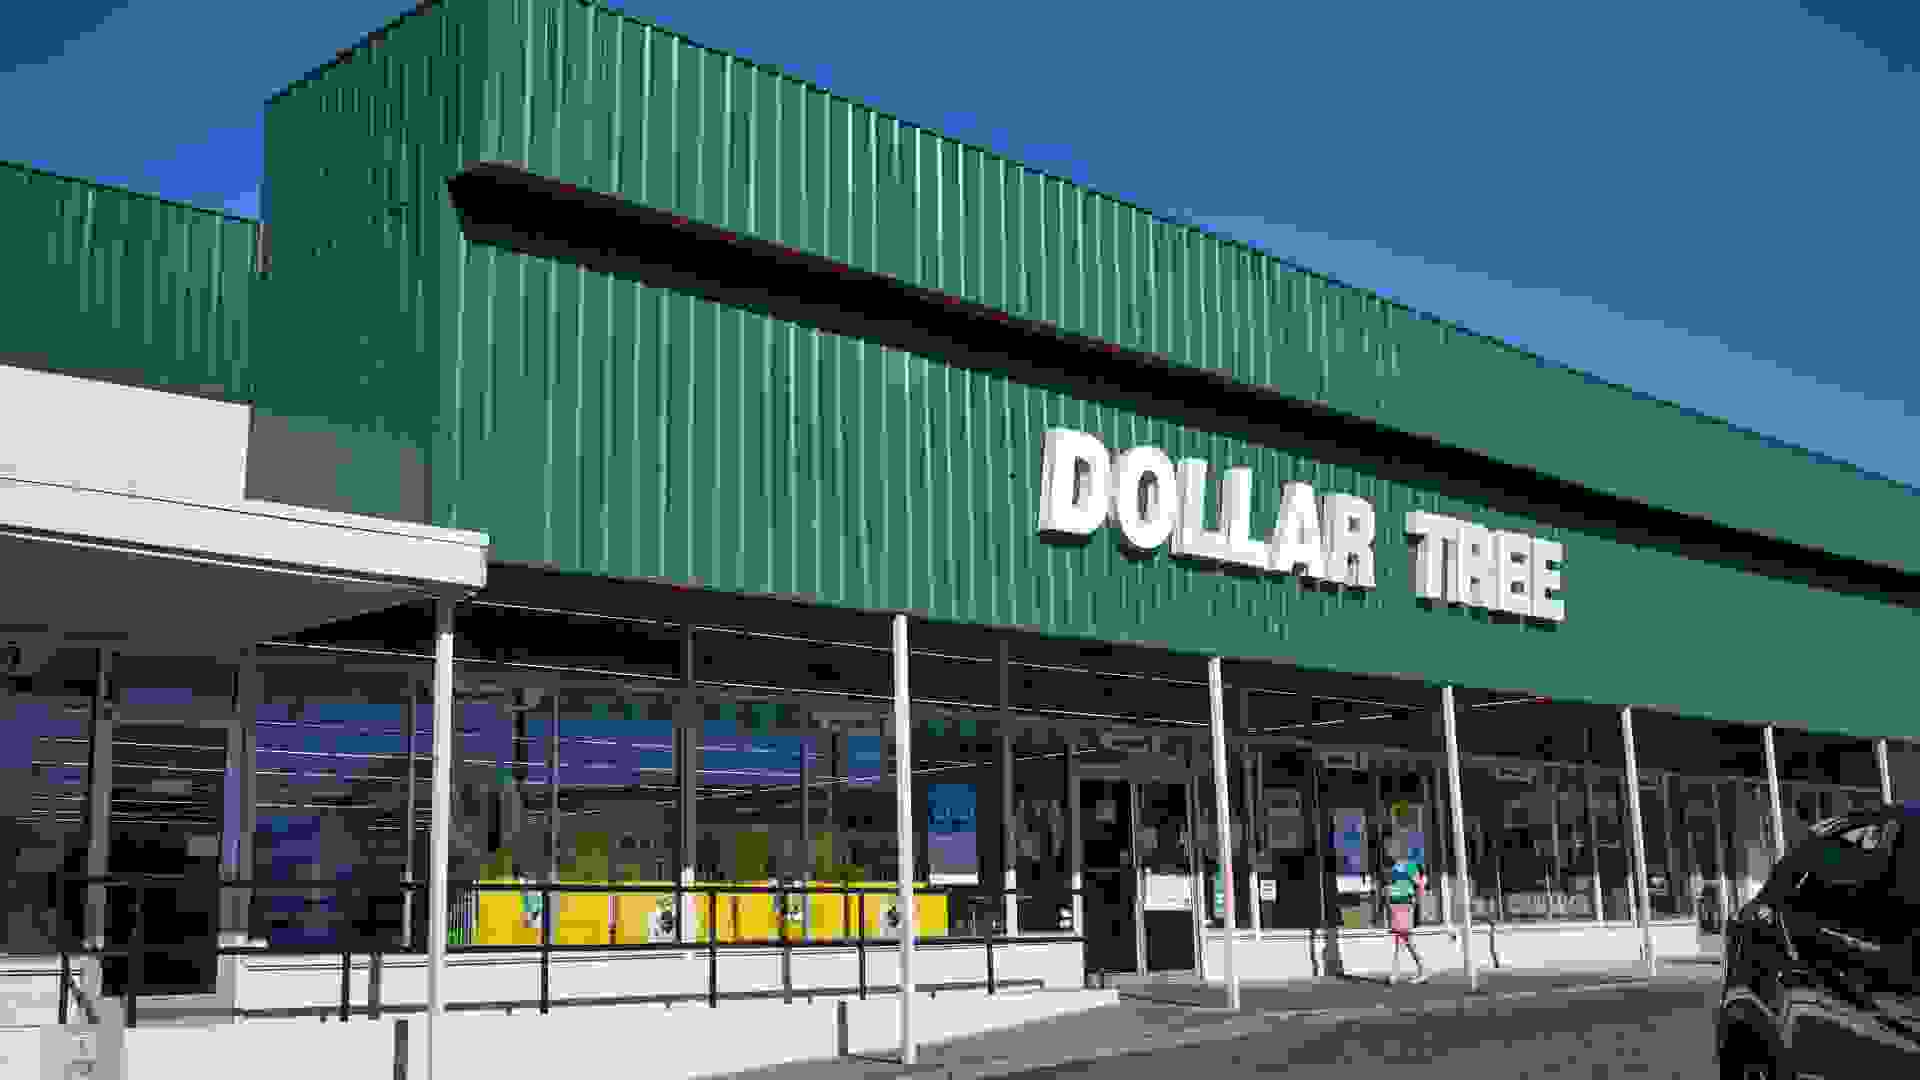 Tigard, OR, USA - Aug 10, 2020: A Dollar Tree store in Tigard, Oregon.